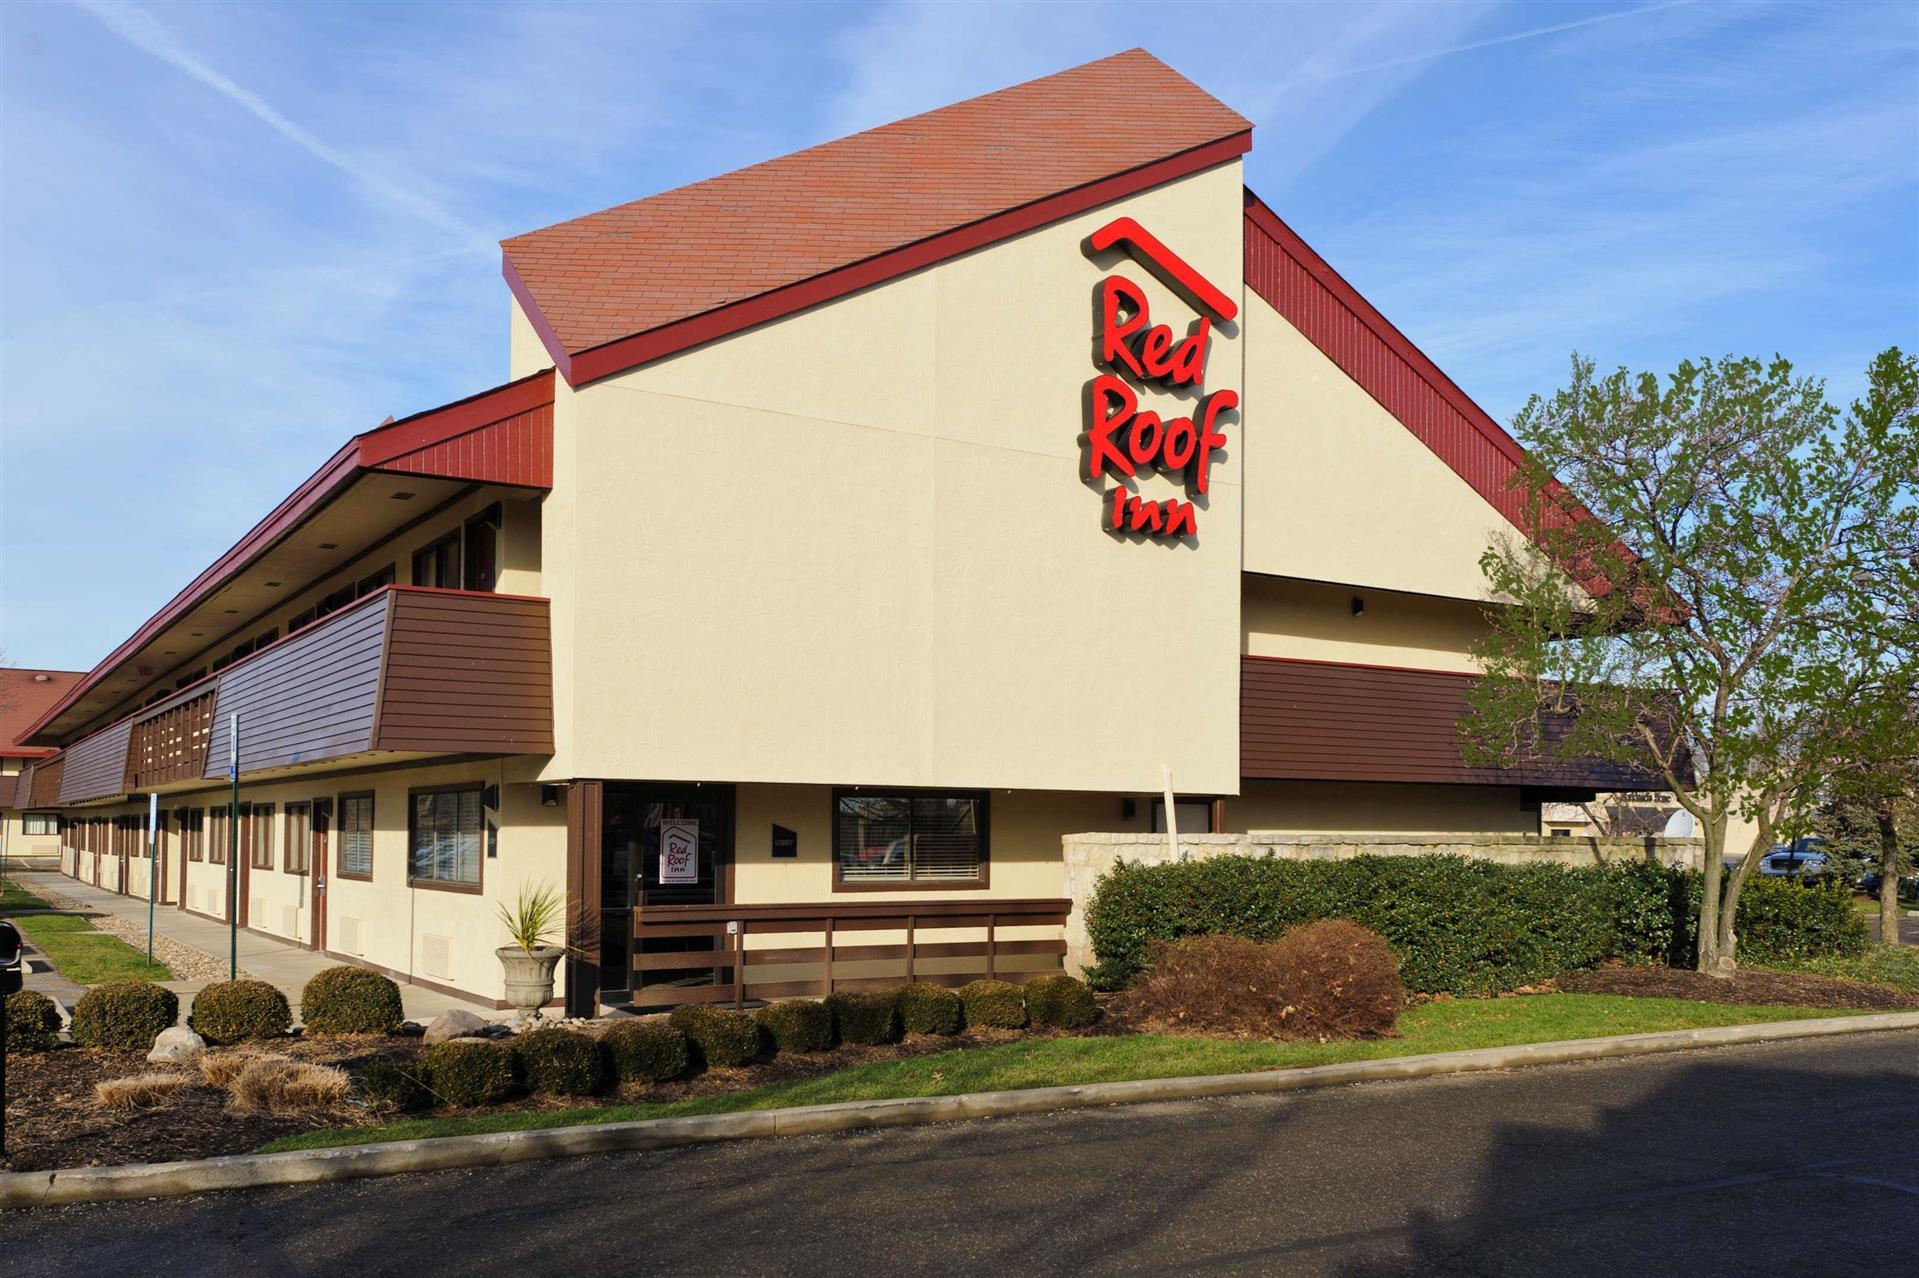 Red Roof Inn Chicago - Joliet in Joliet, IL